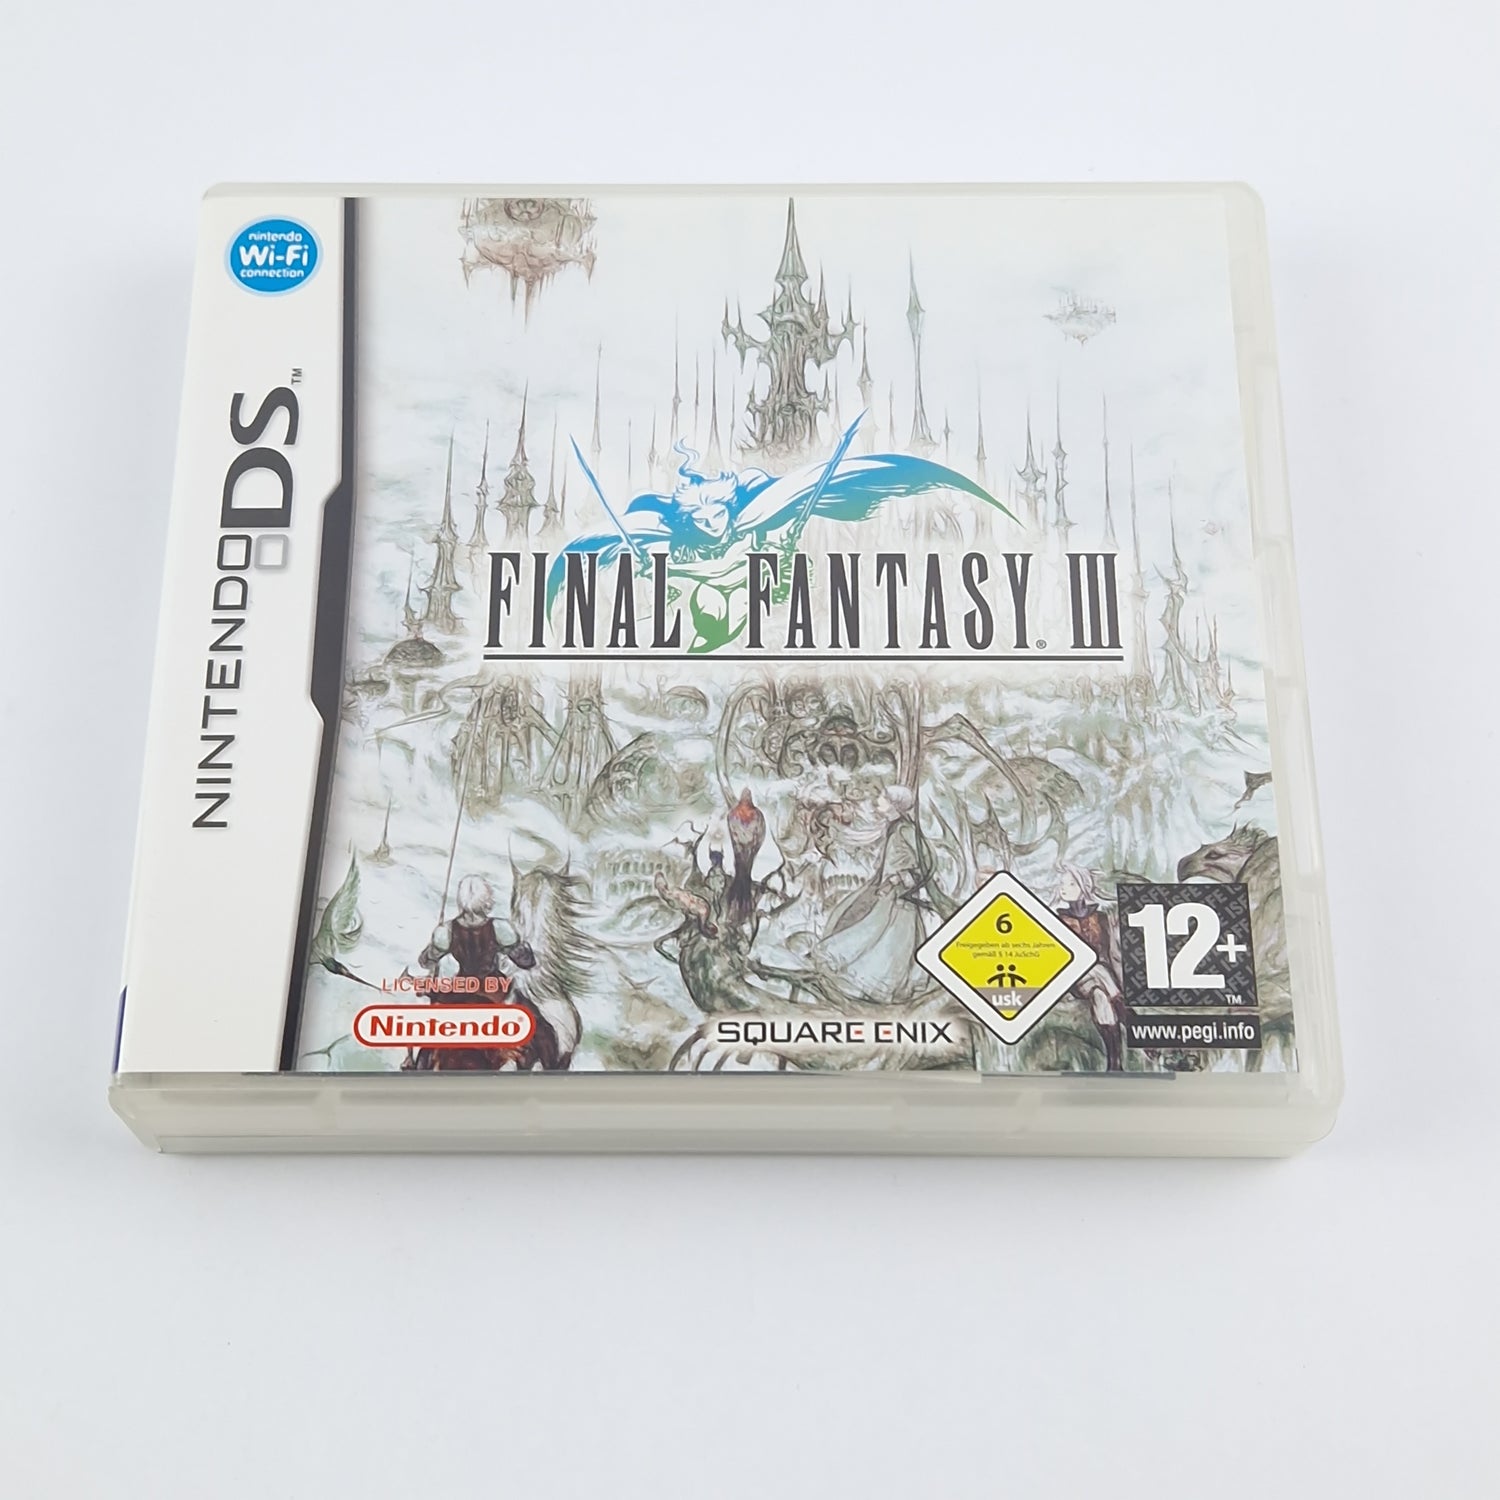 Nintendo DS Spiel : Final Fantasy III + FF 3 das offizielle Lösungsbuch neu